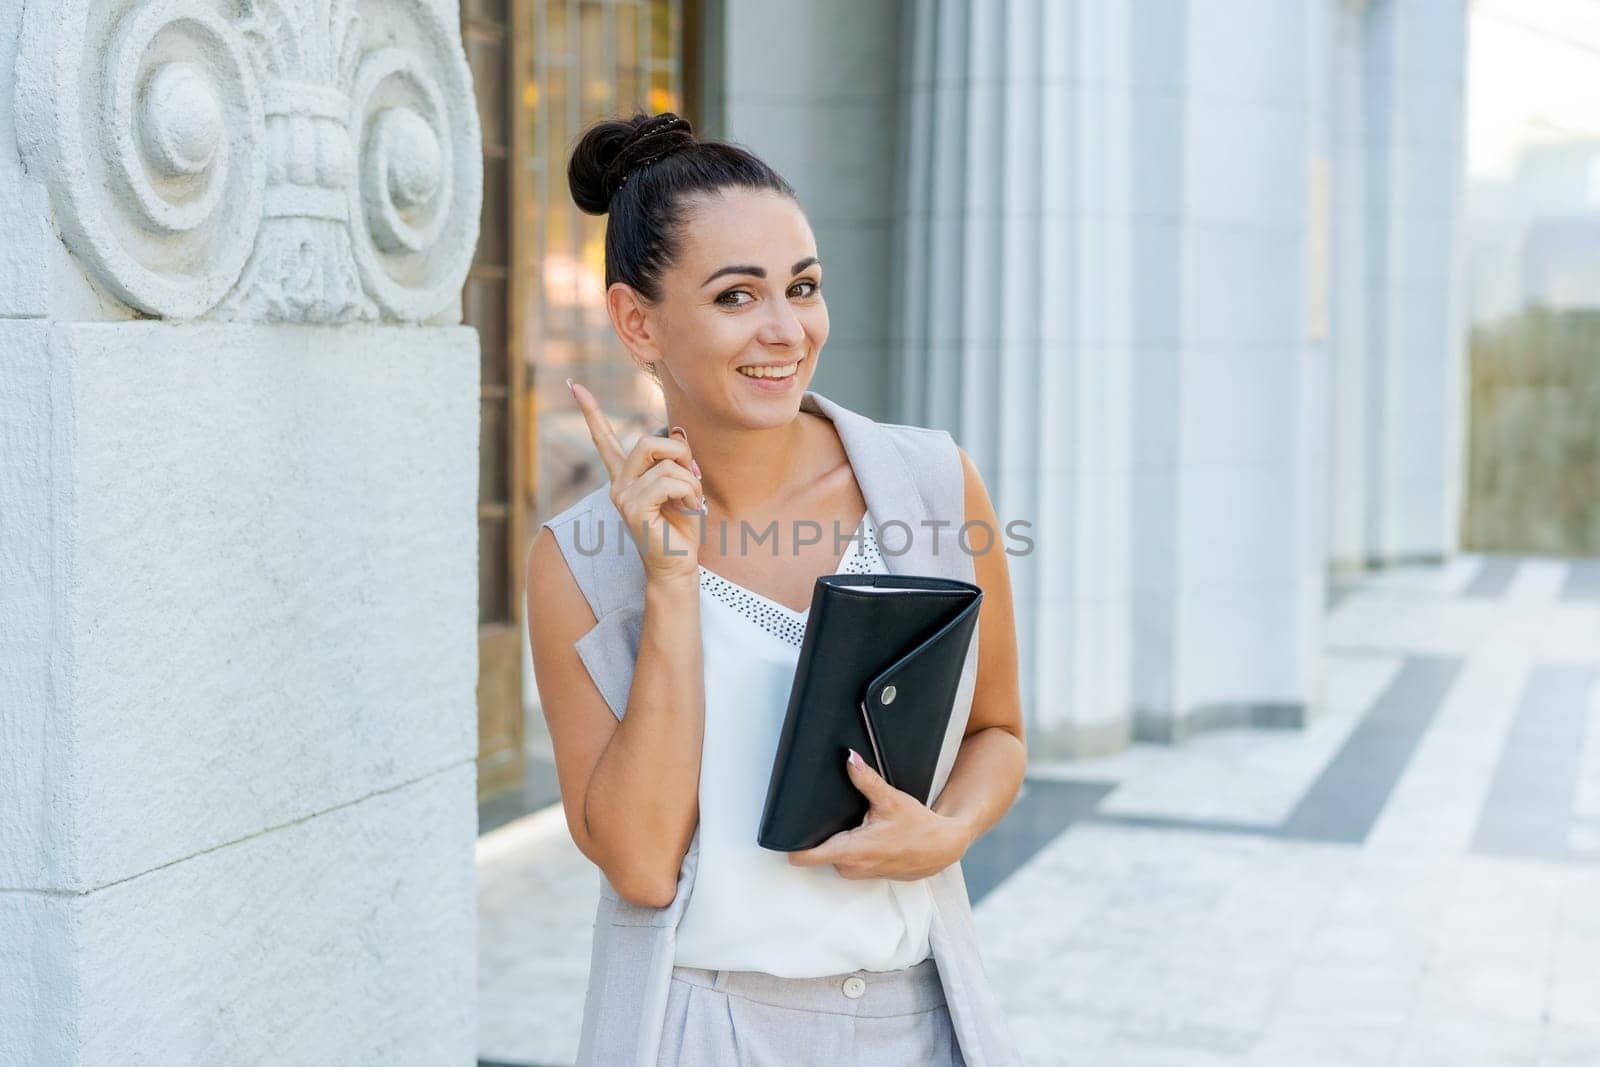 Successful businessman or entrepreneur smiling holding notepad while walking by EkaterinaPereslavtseva